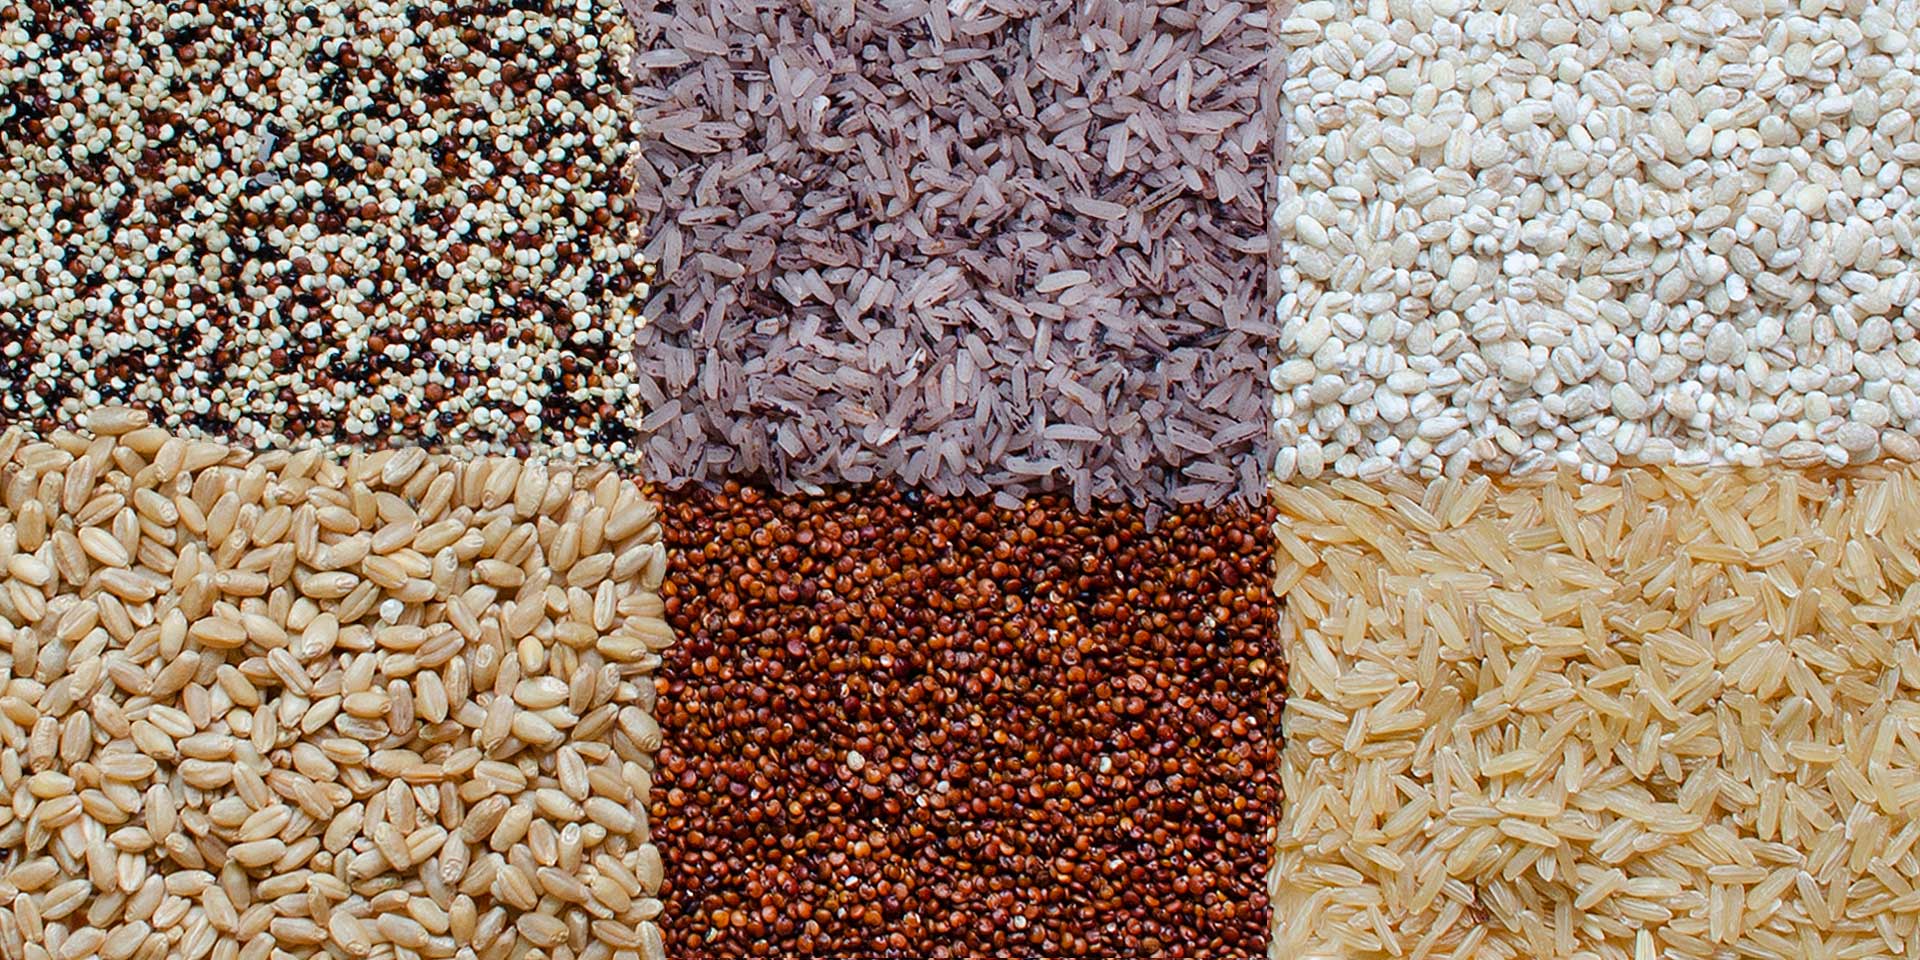 variety of grains